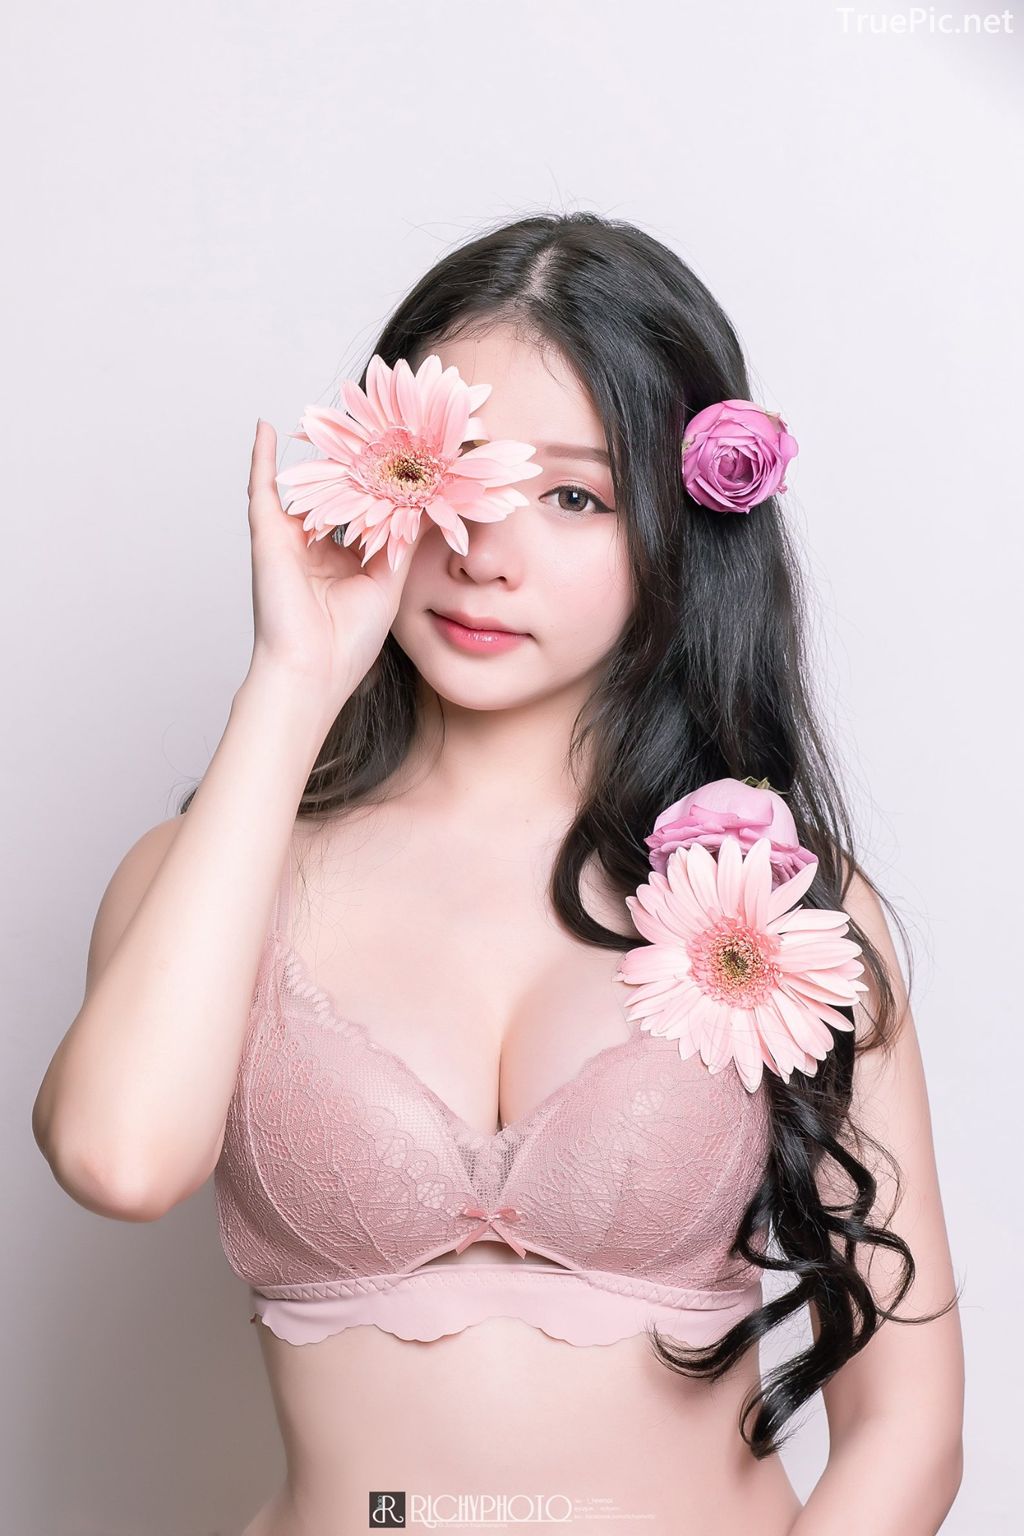 Image-Thailand-Cute-Model-Tuktick-Ponthip-Tantisuwanna-Girl-On-Flower-TruePic.net- Picture-34